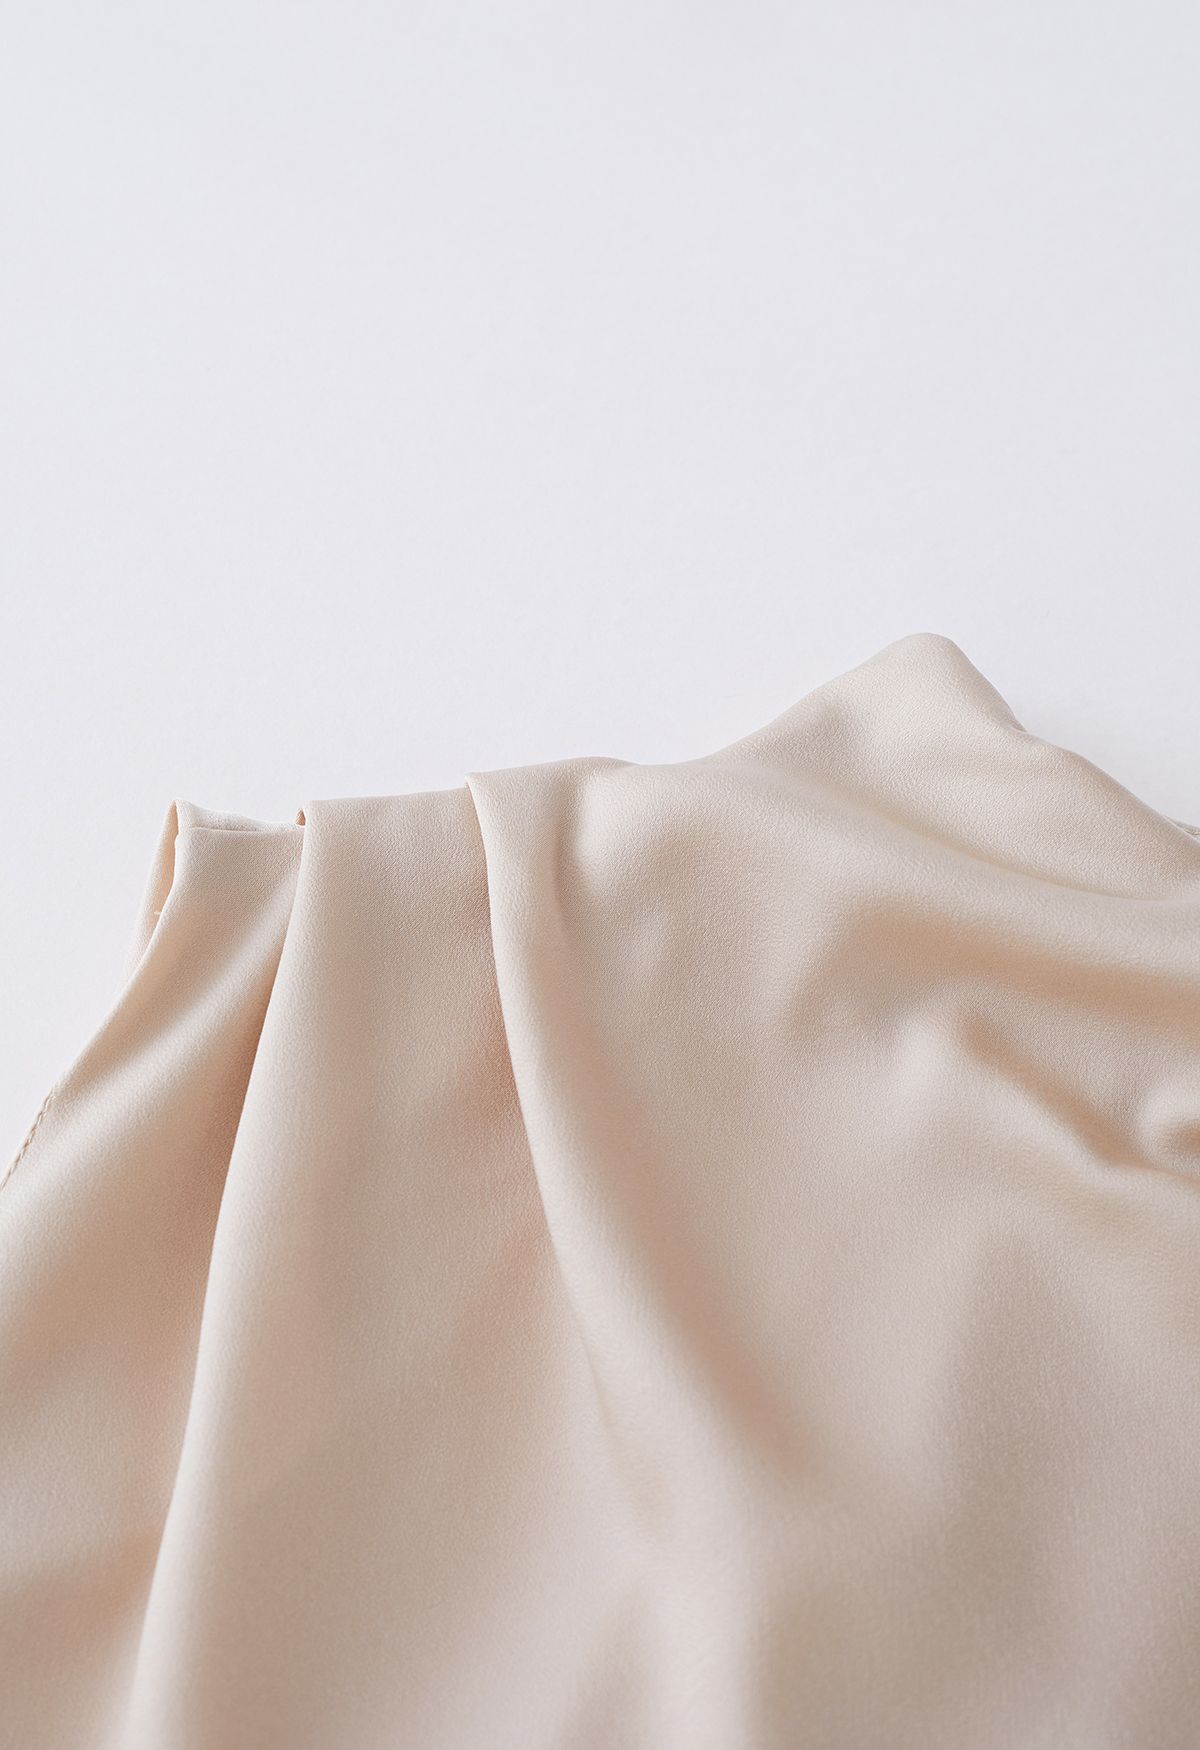 Asymmetrisches ärmelloses Kleid mit gerüschtem Ausschnitt in Apricot